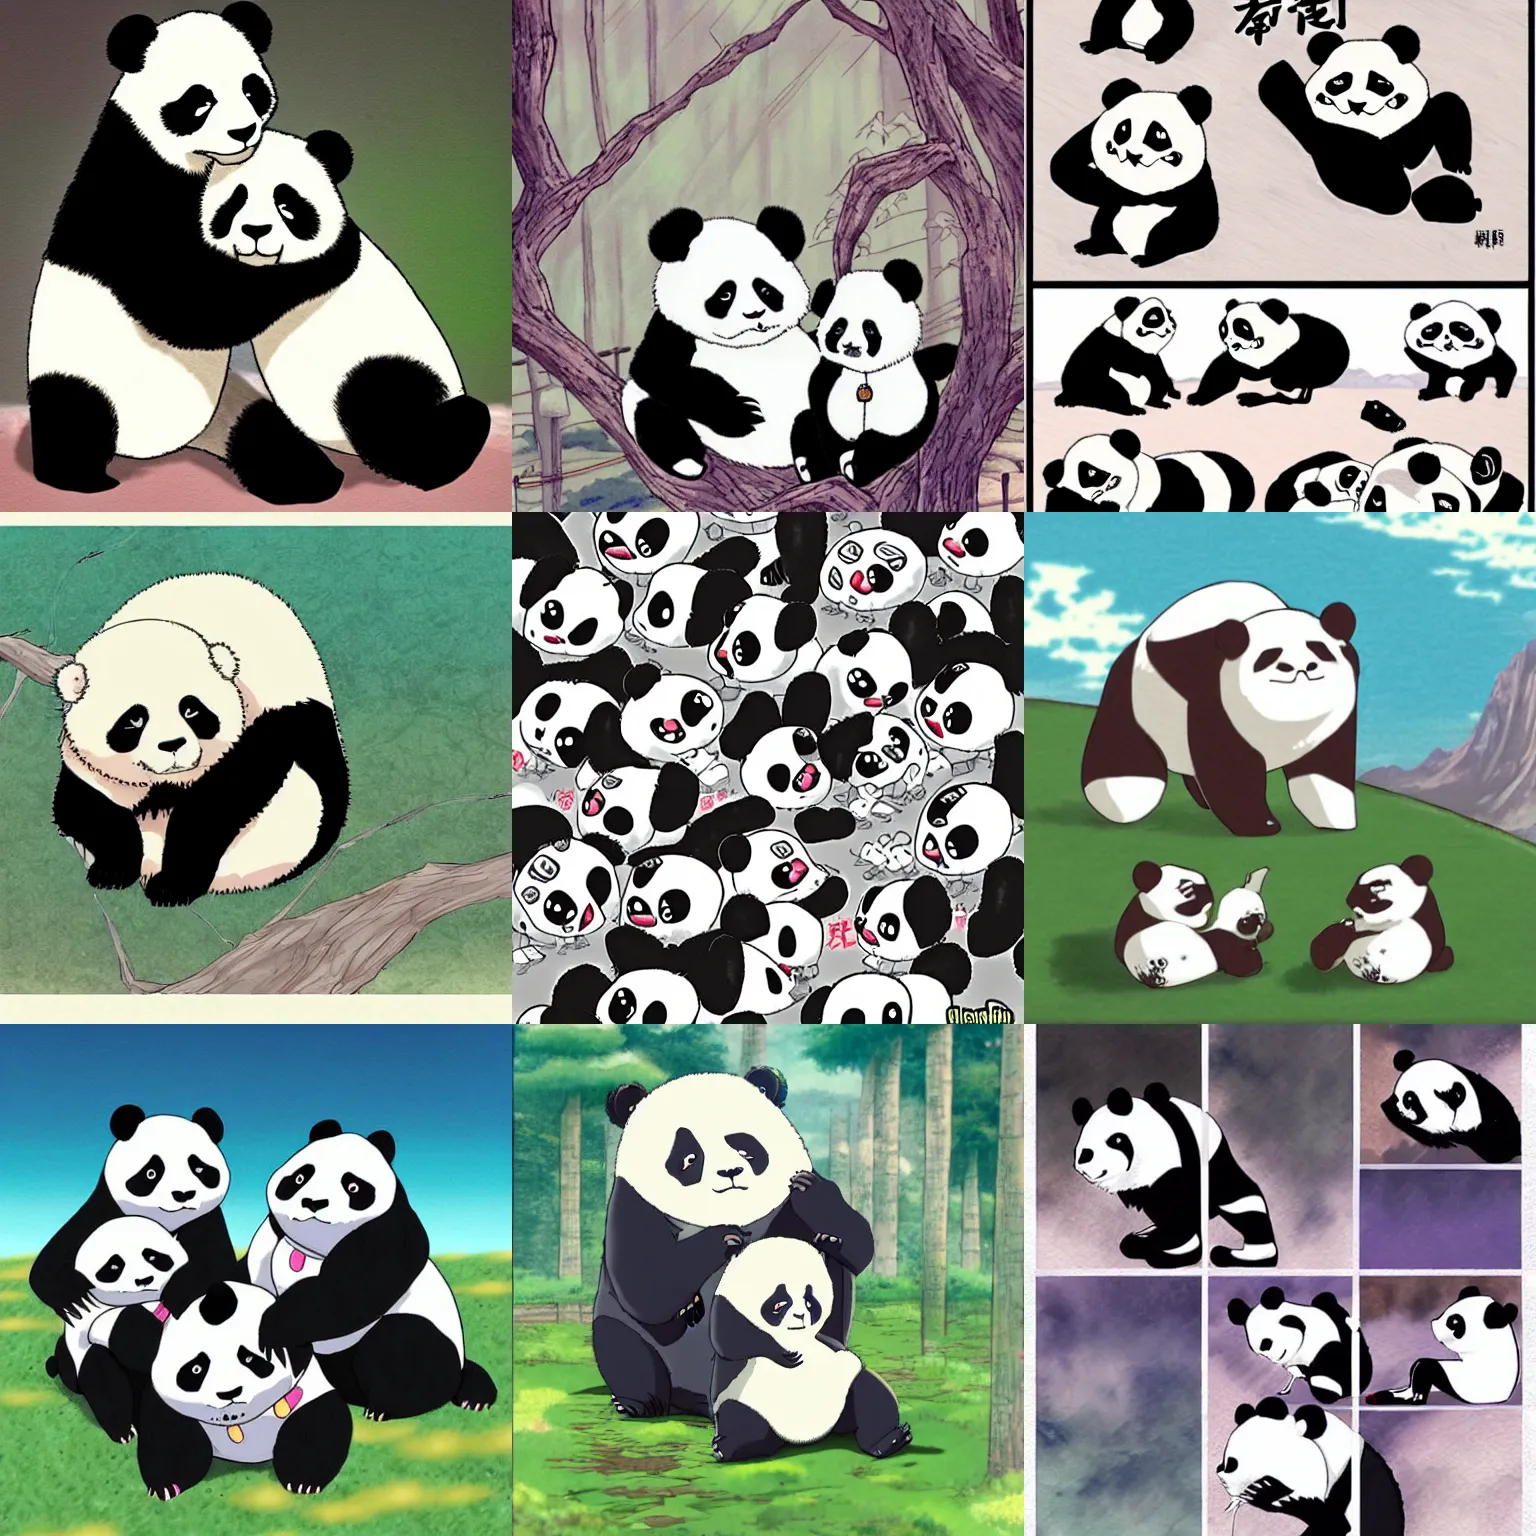 Prompt: pandas in an anime style, miyazaki